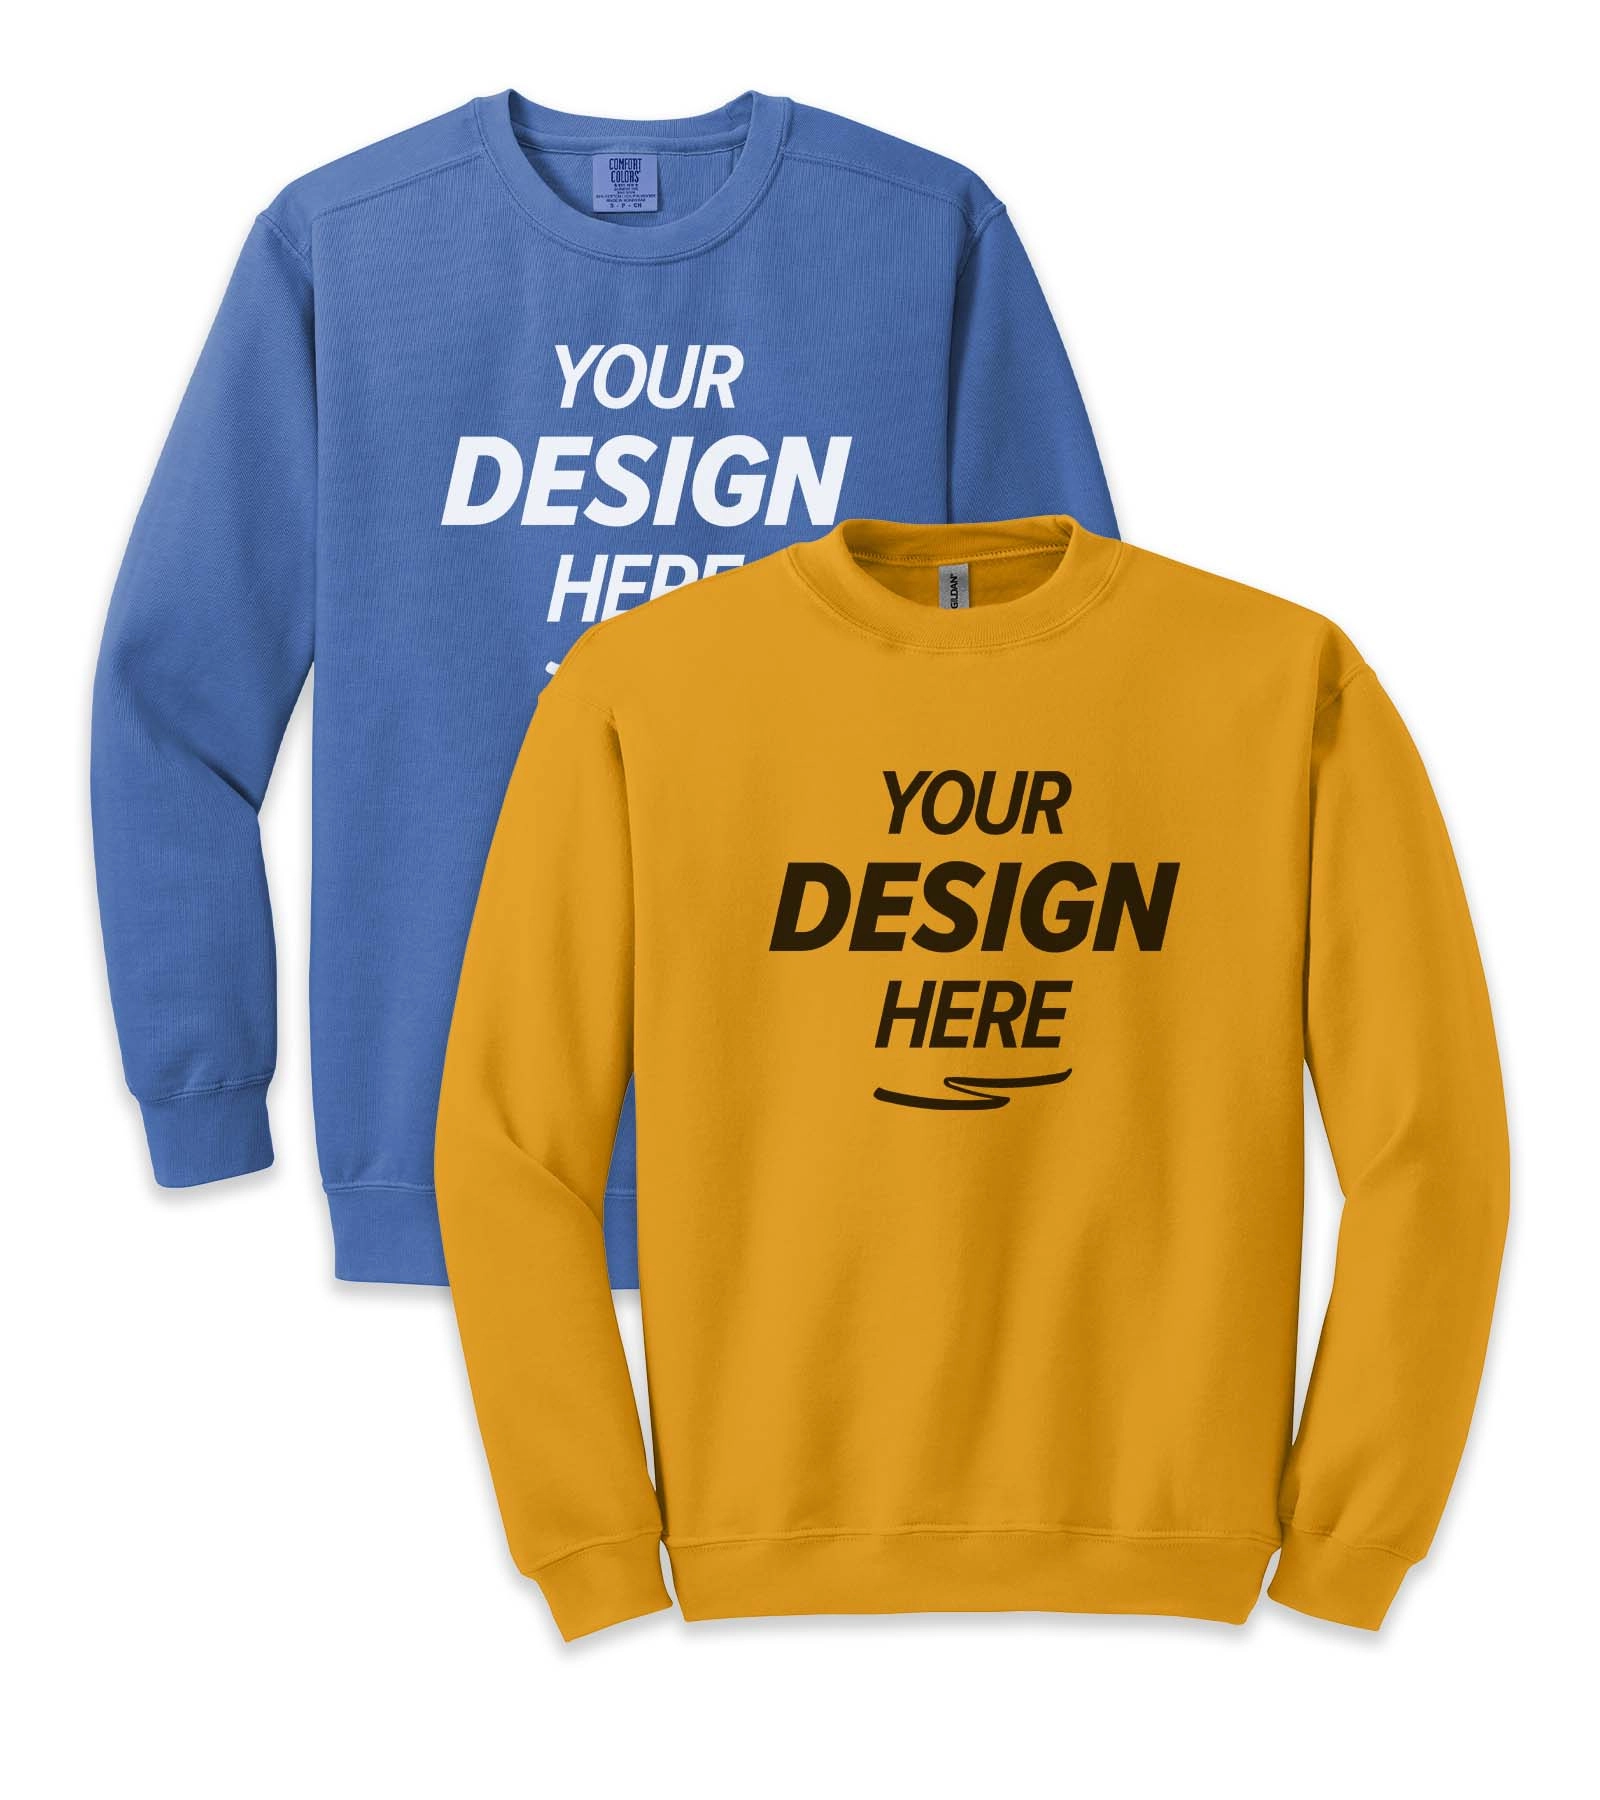 Custom Print Crewneck Sweatshirts From Bangladesh Factory